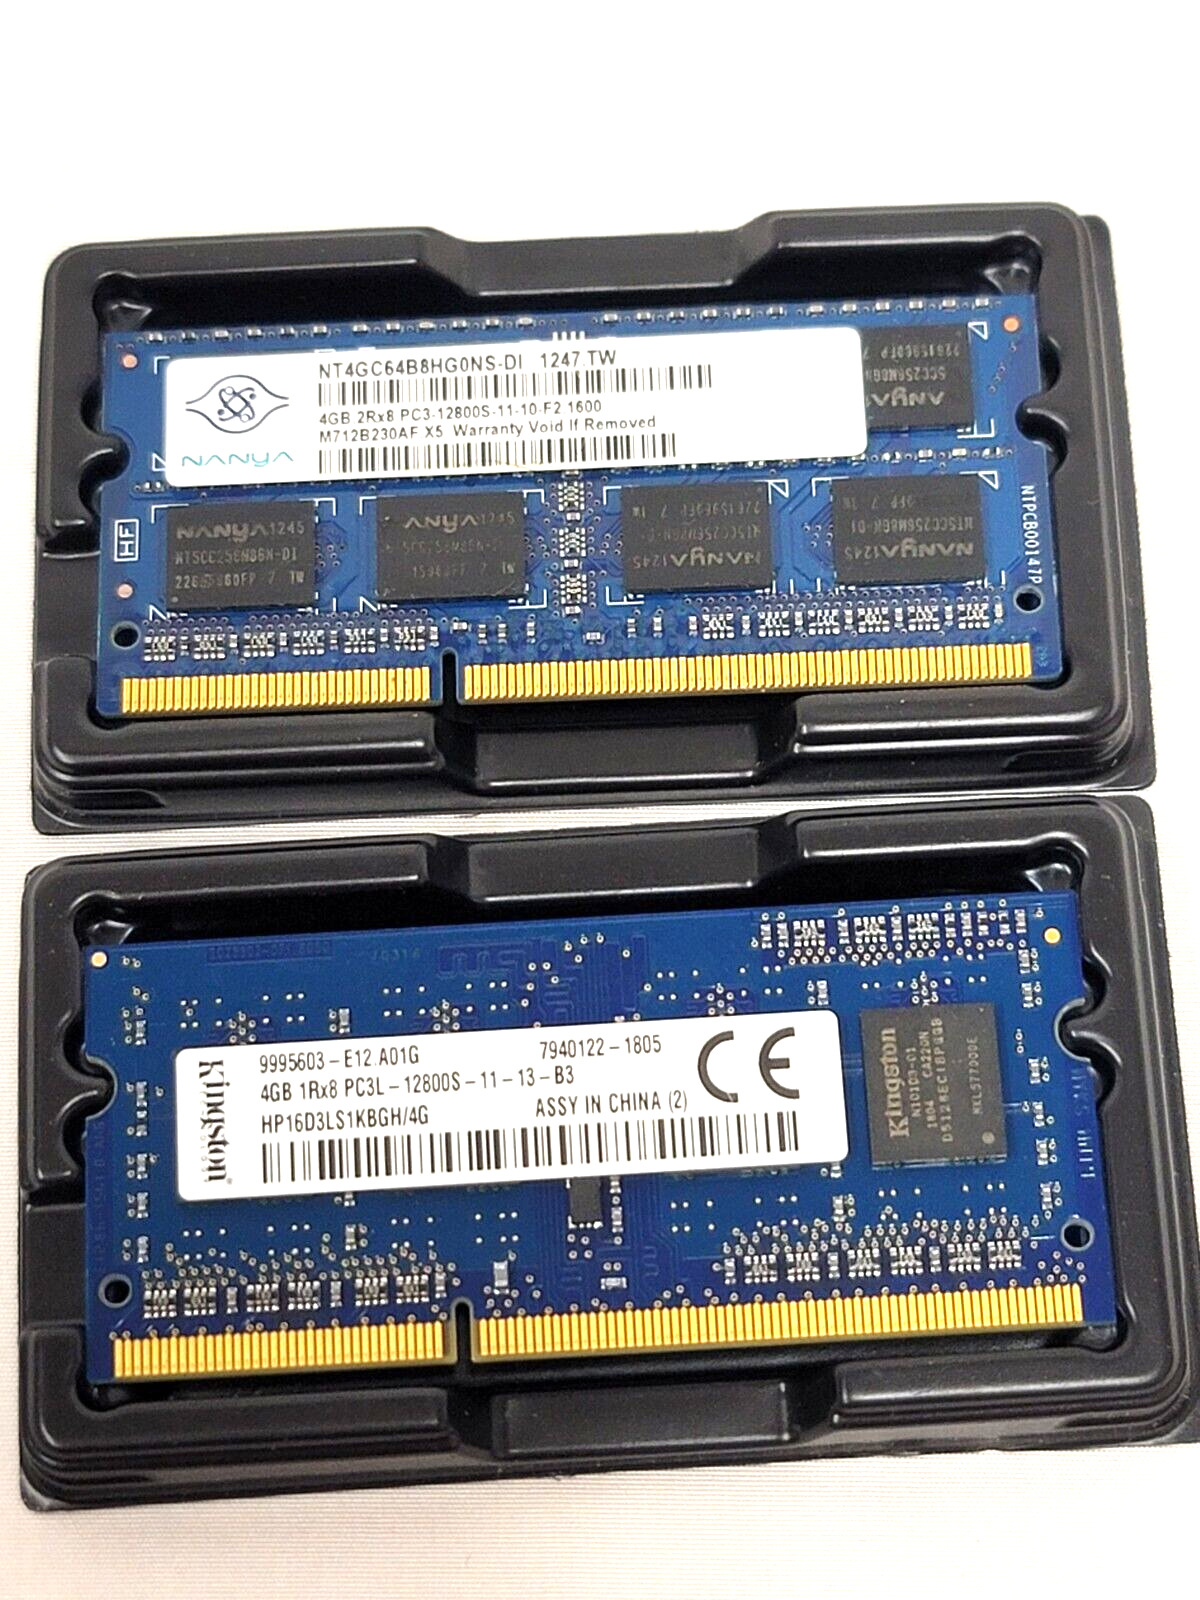 Kingston PC3-10600 (DDR3-1333) 4 GB SO-DIMM 1333 MHz PC3-10600 DDR3 Memory...